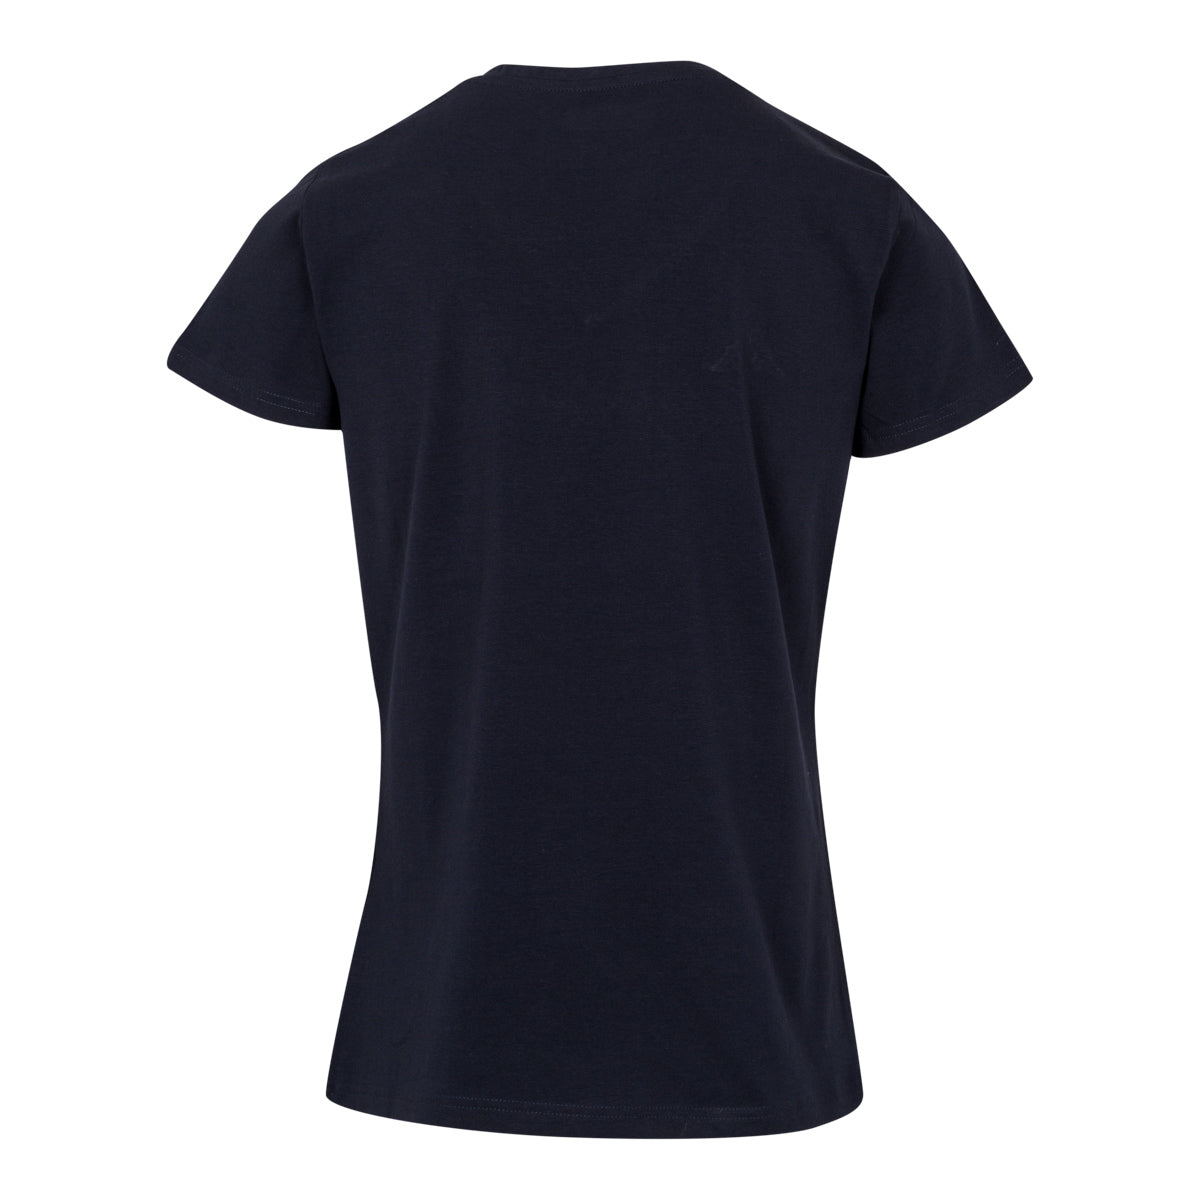 T-shirt Lifestyle Meleti Bleu Femme - Image 2